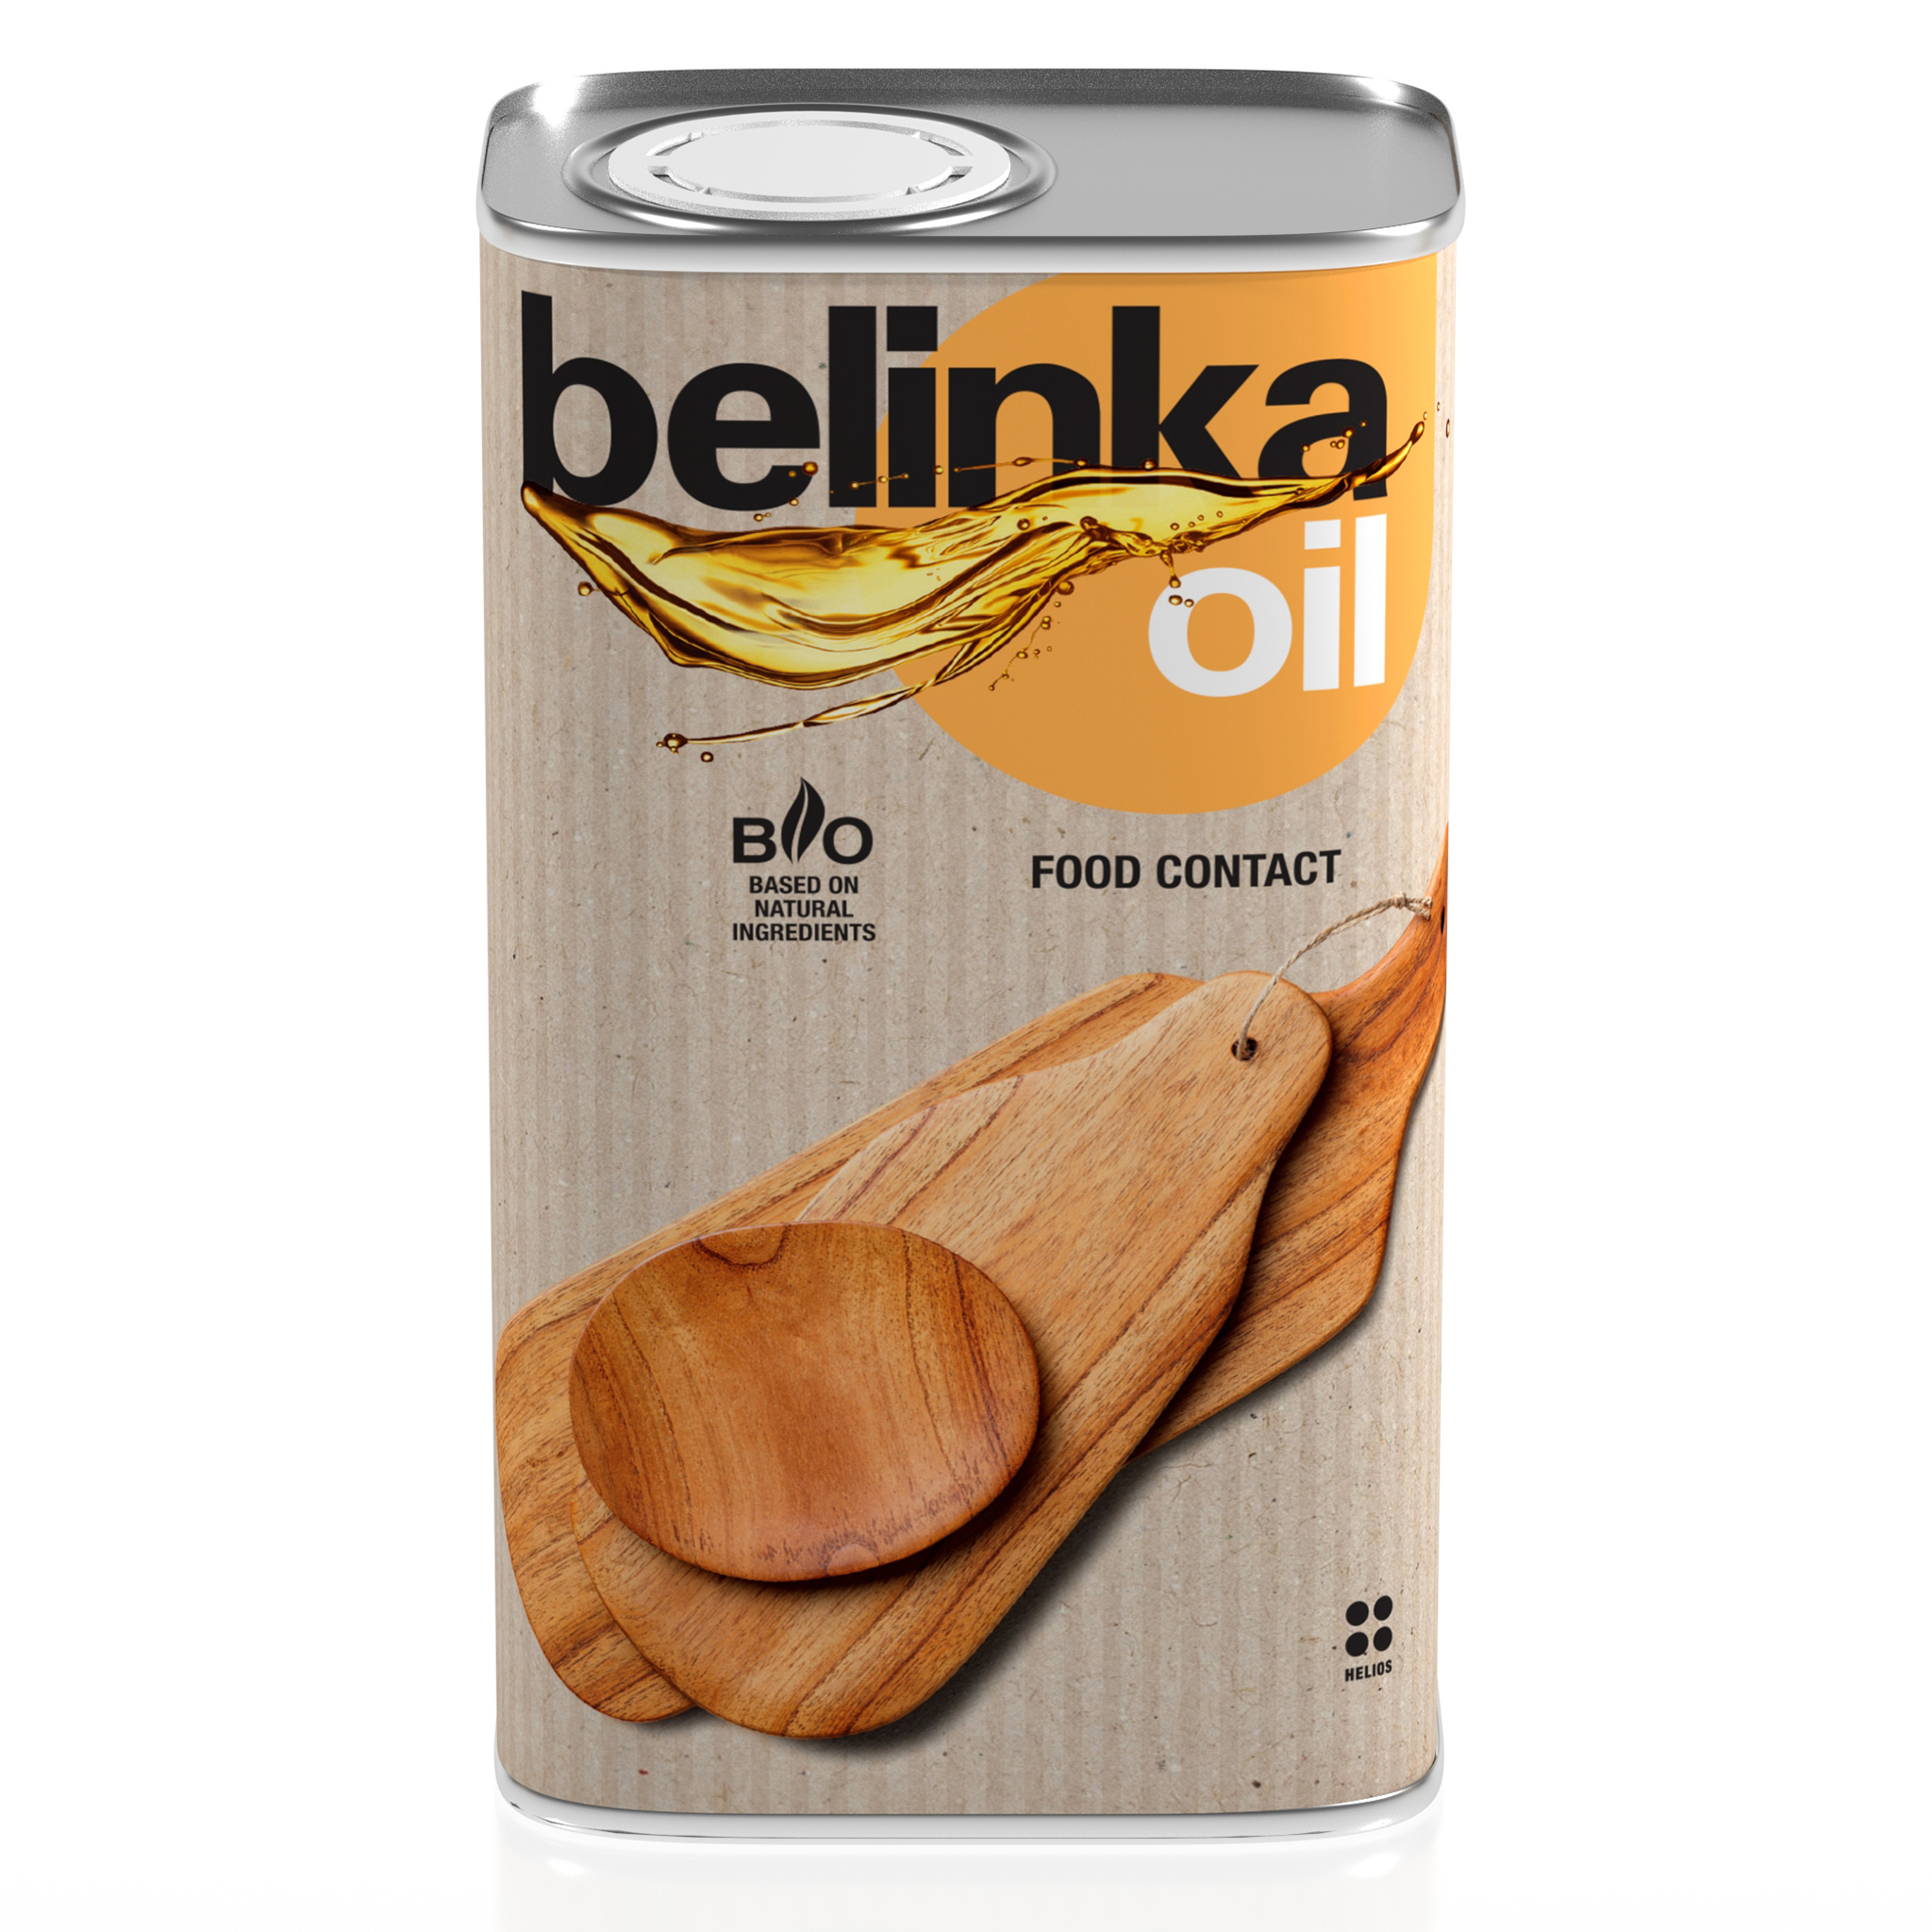 Масло для дерева мерлен. Масло Belinka Oil. Масло для дерева Belinka. Belinka Oil для мебели. Белинка масло для дерева.